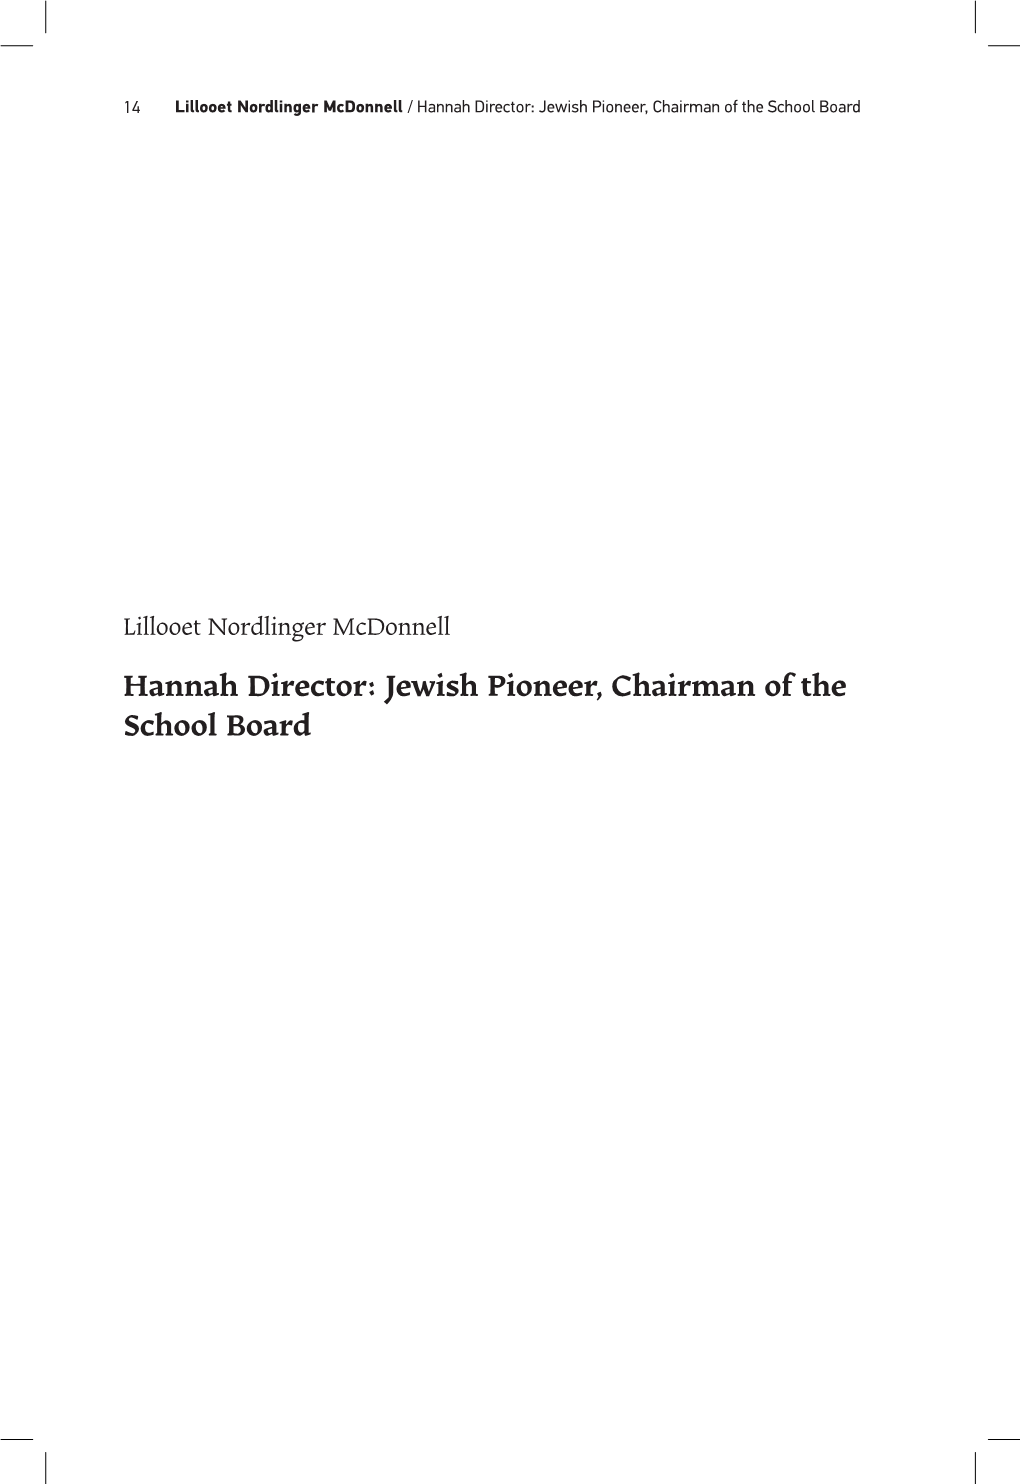 Hannah Director: Jewish Pioneer, Chairman of the School Board